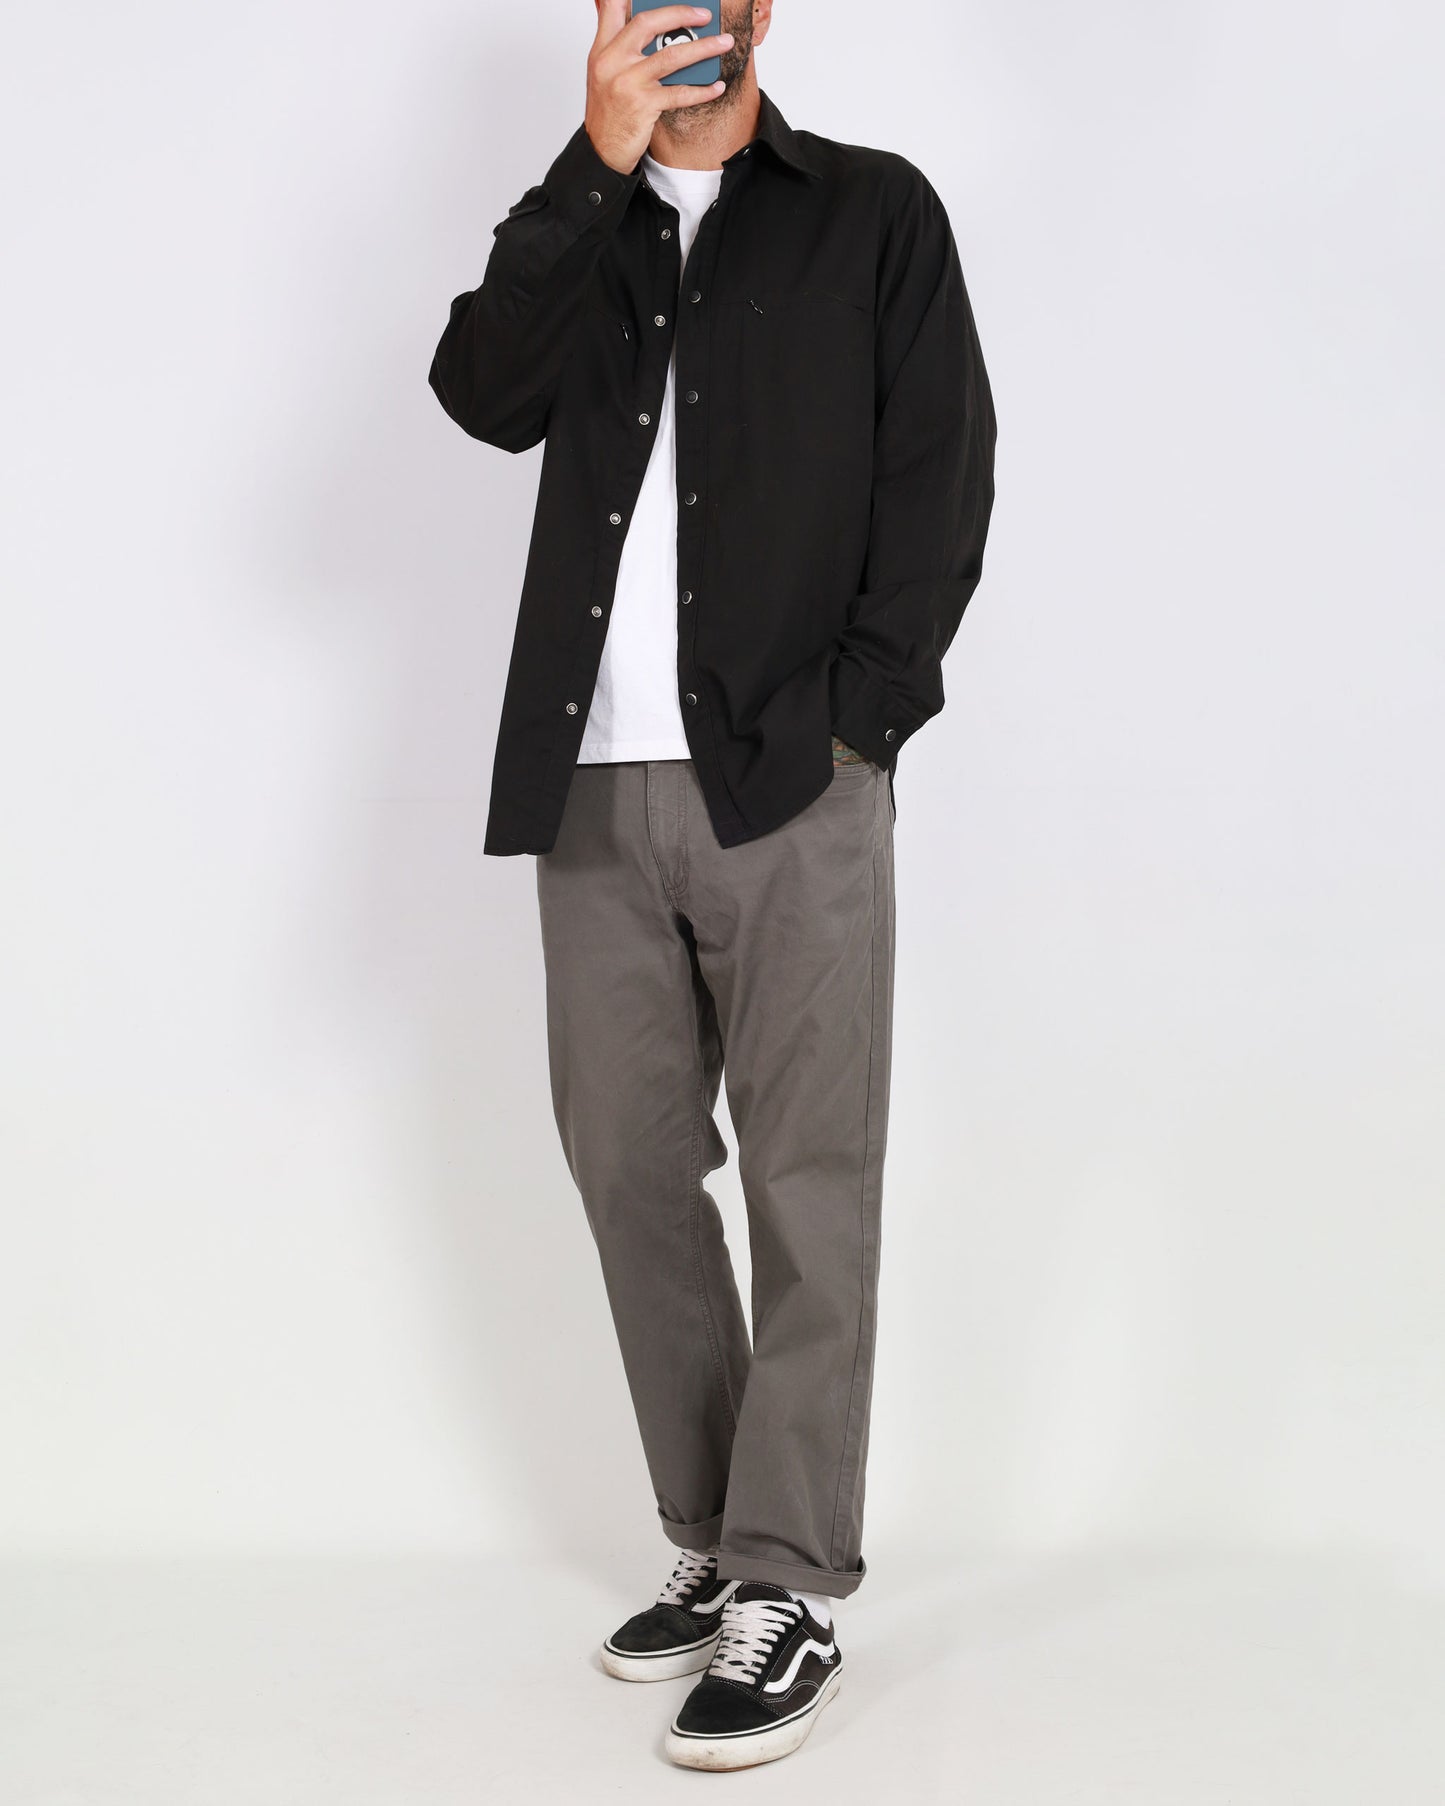 Calvin Klein Snap Long Sleeve Shirt in Black L